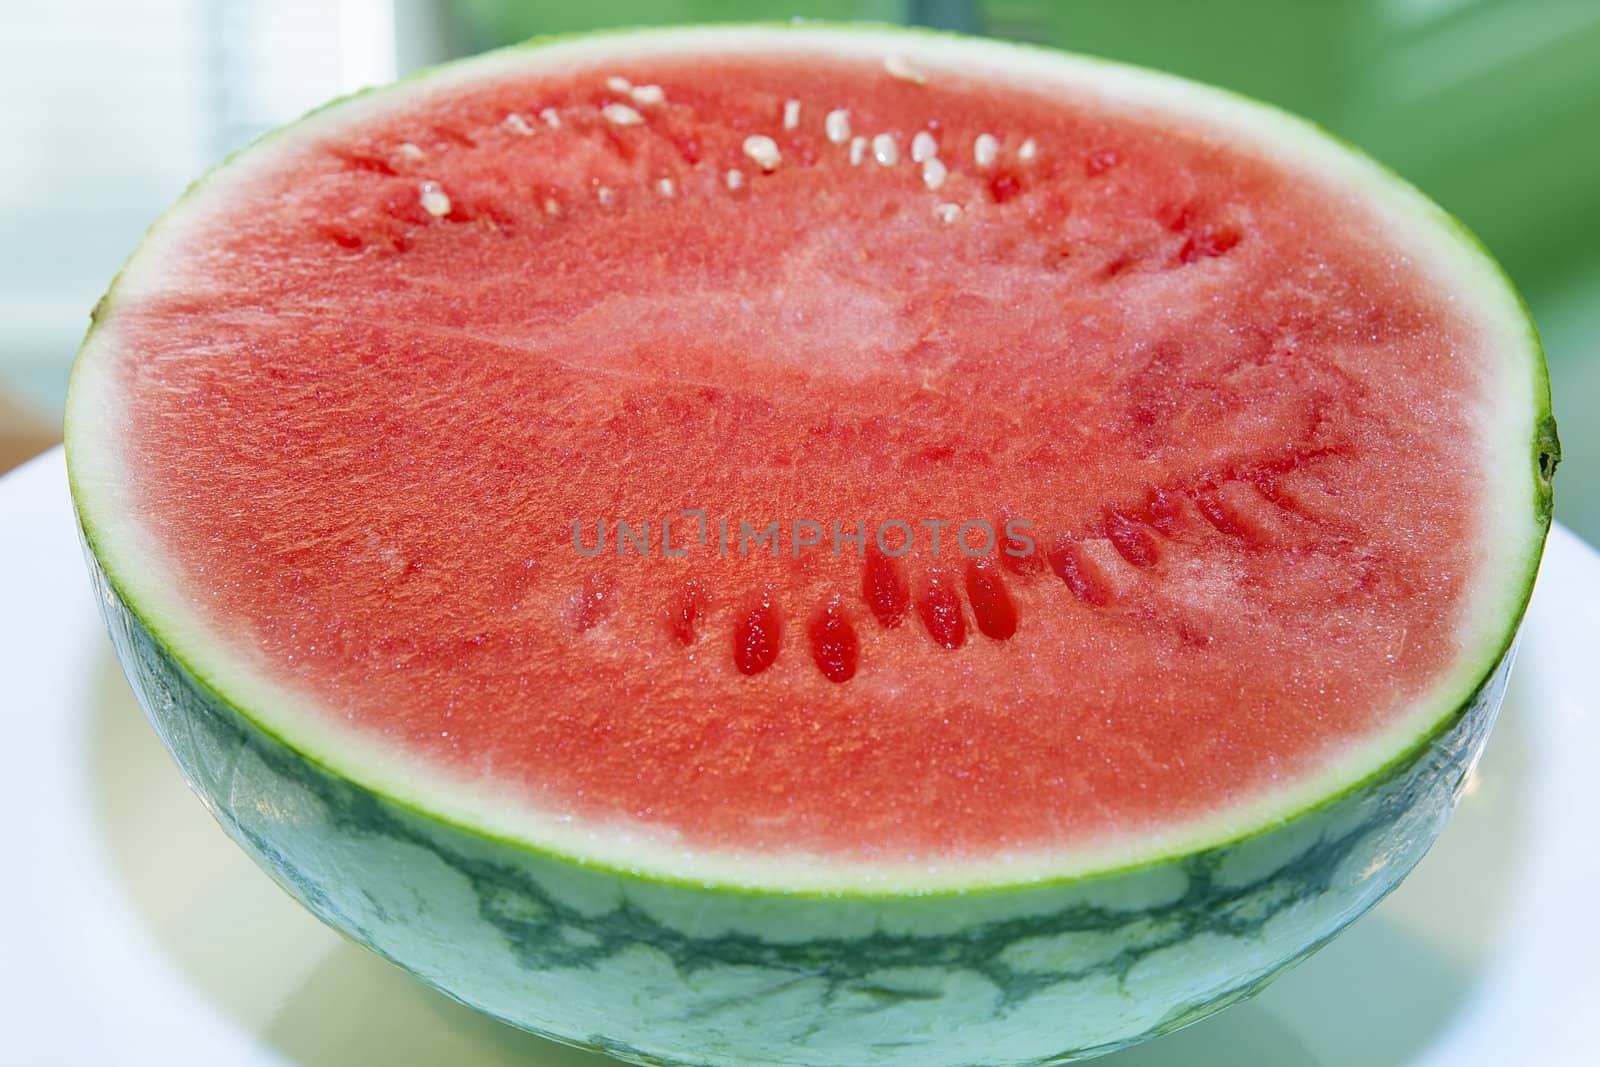 Seedless Watermelon Cut in Half by jpldesigns